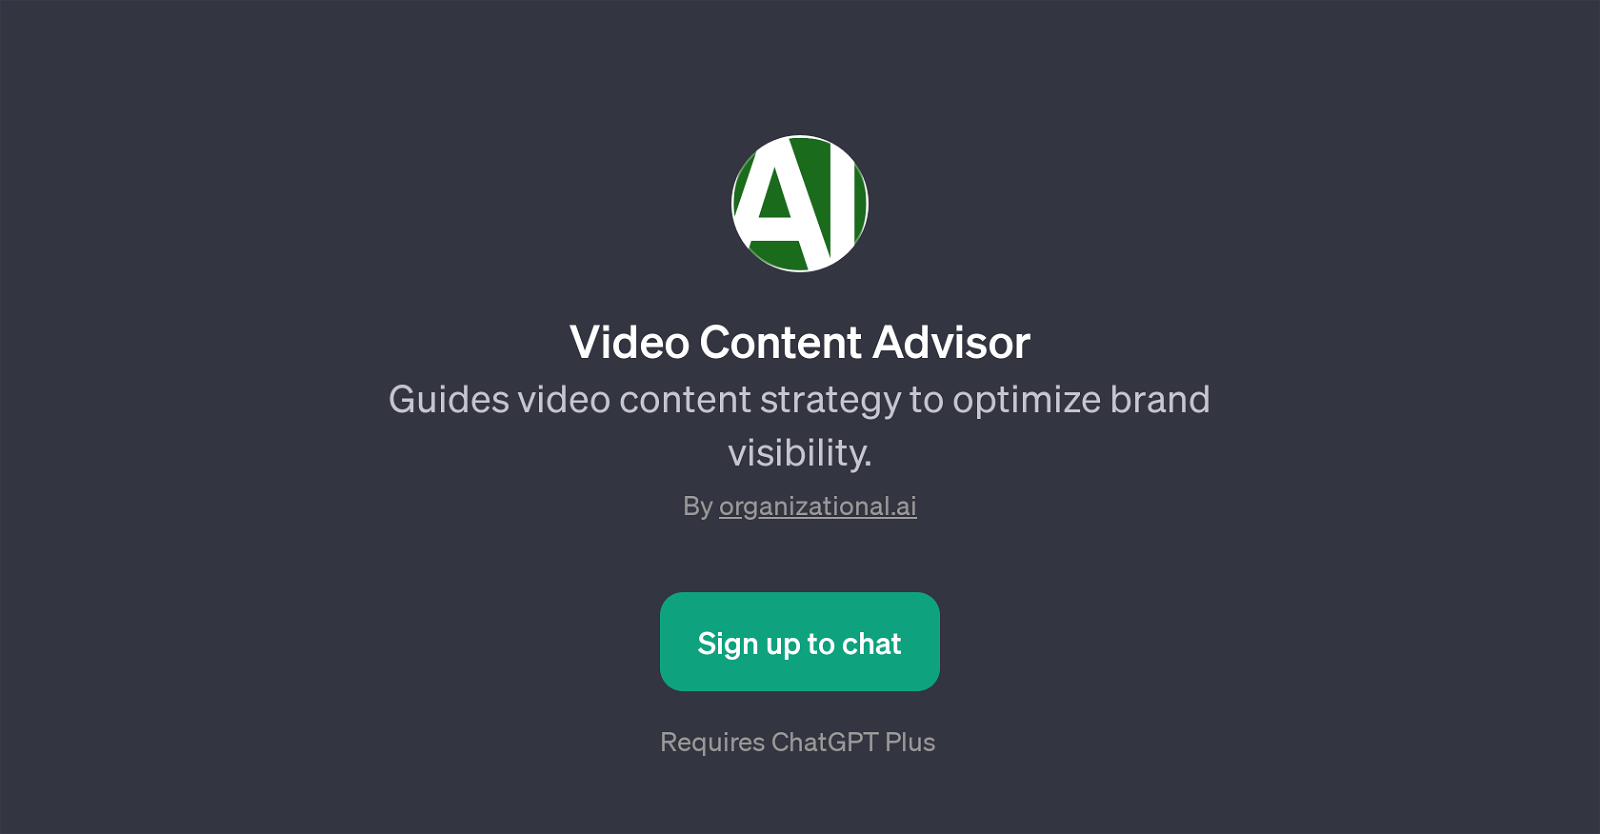 Video Content Advisor website